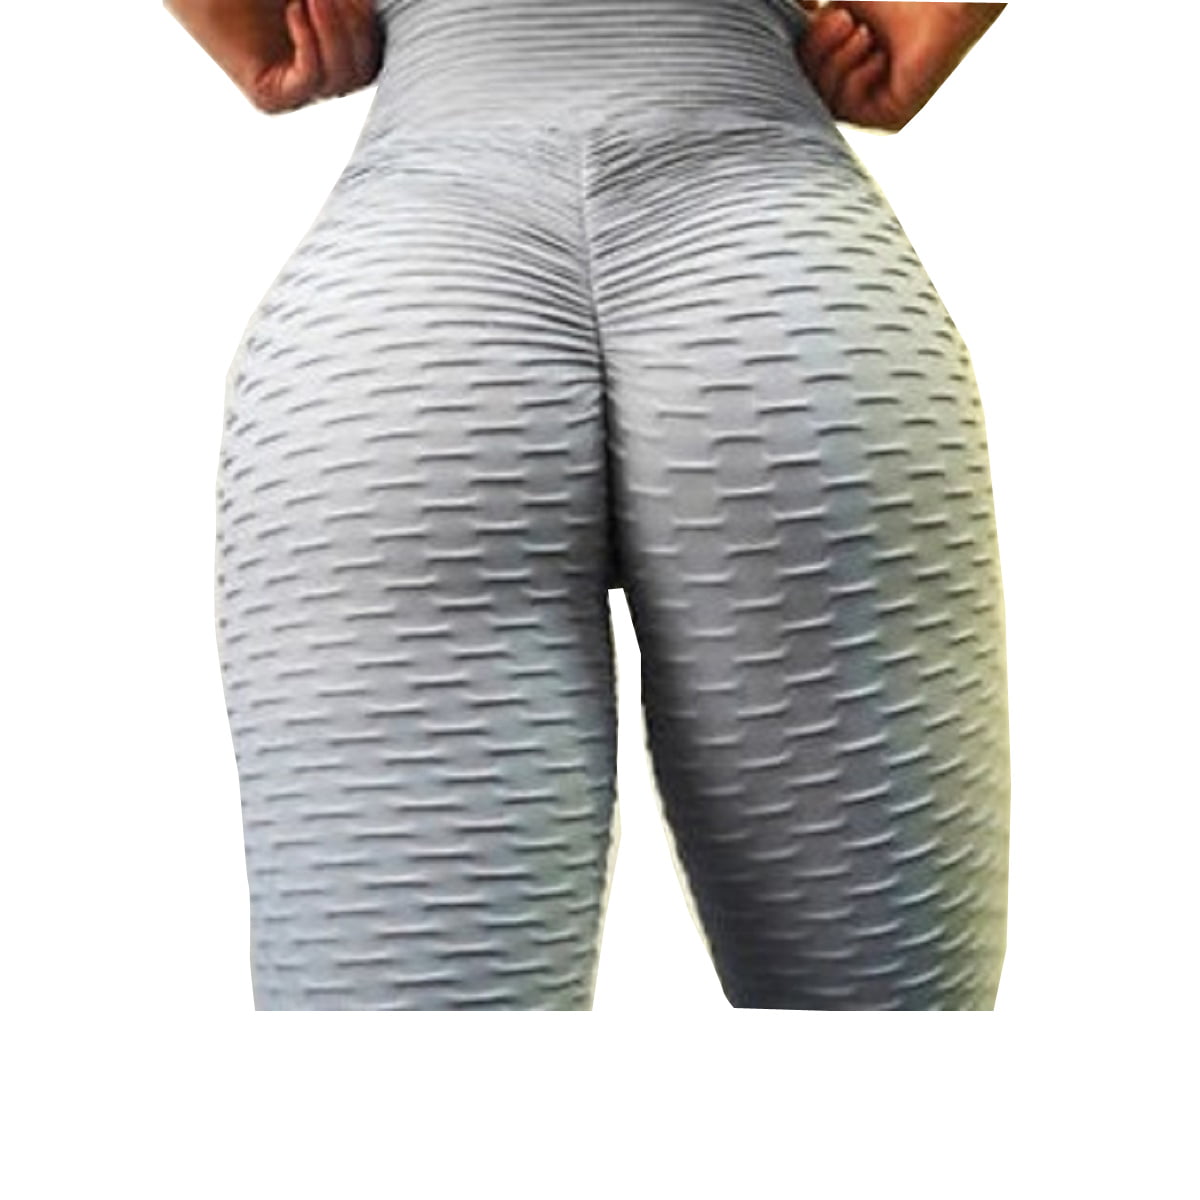 Elastic Women Yoga Gym Anti-Cellulite Sport Leggings Butt  Pants Trousers h8 